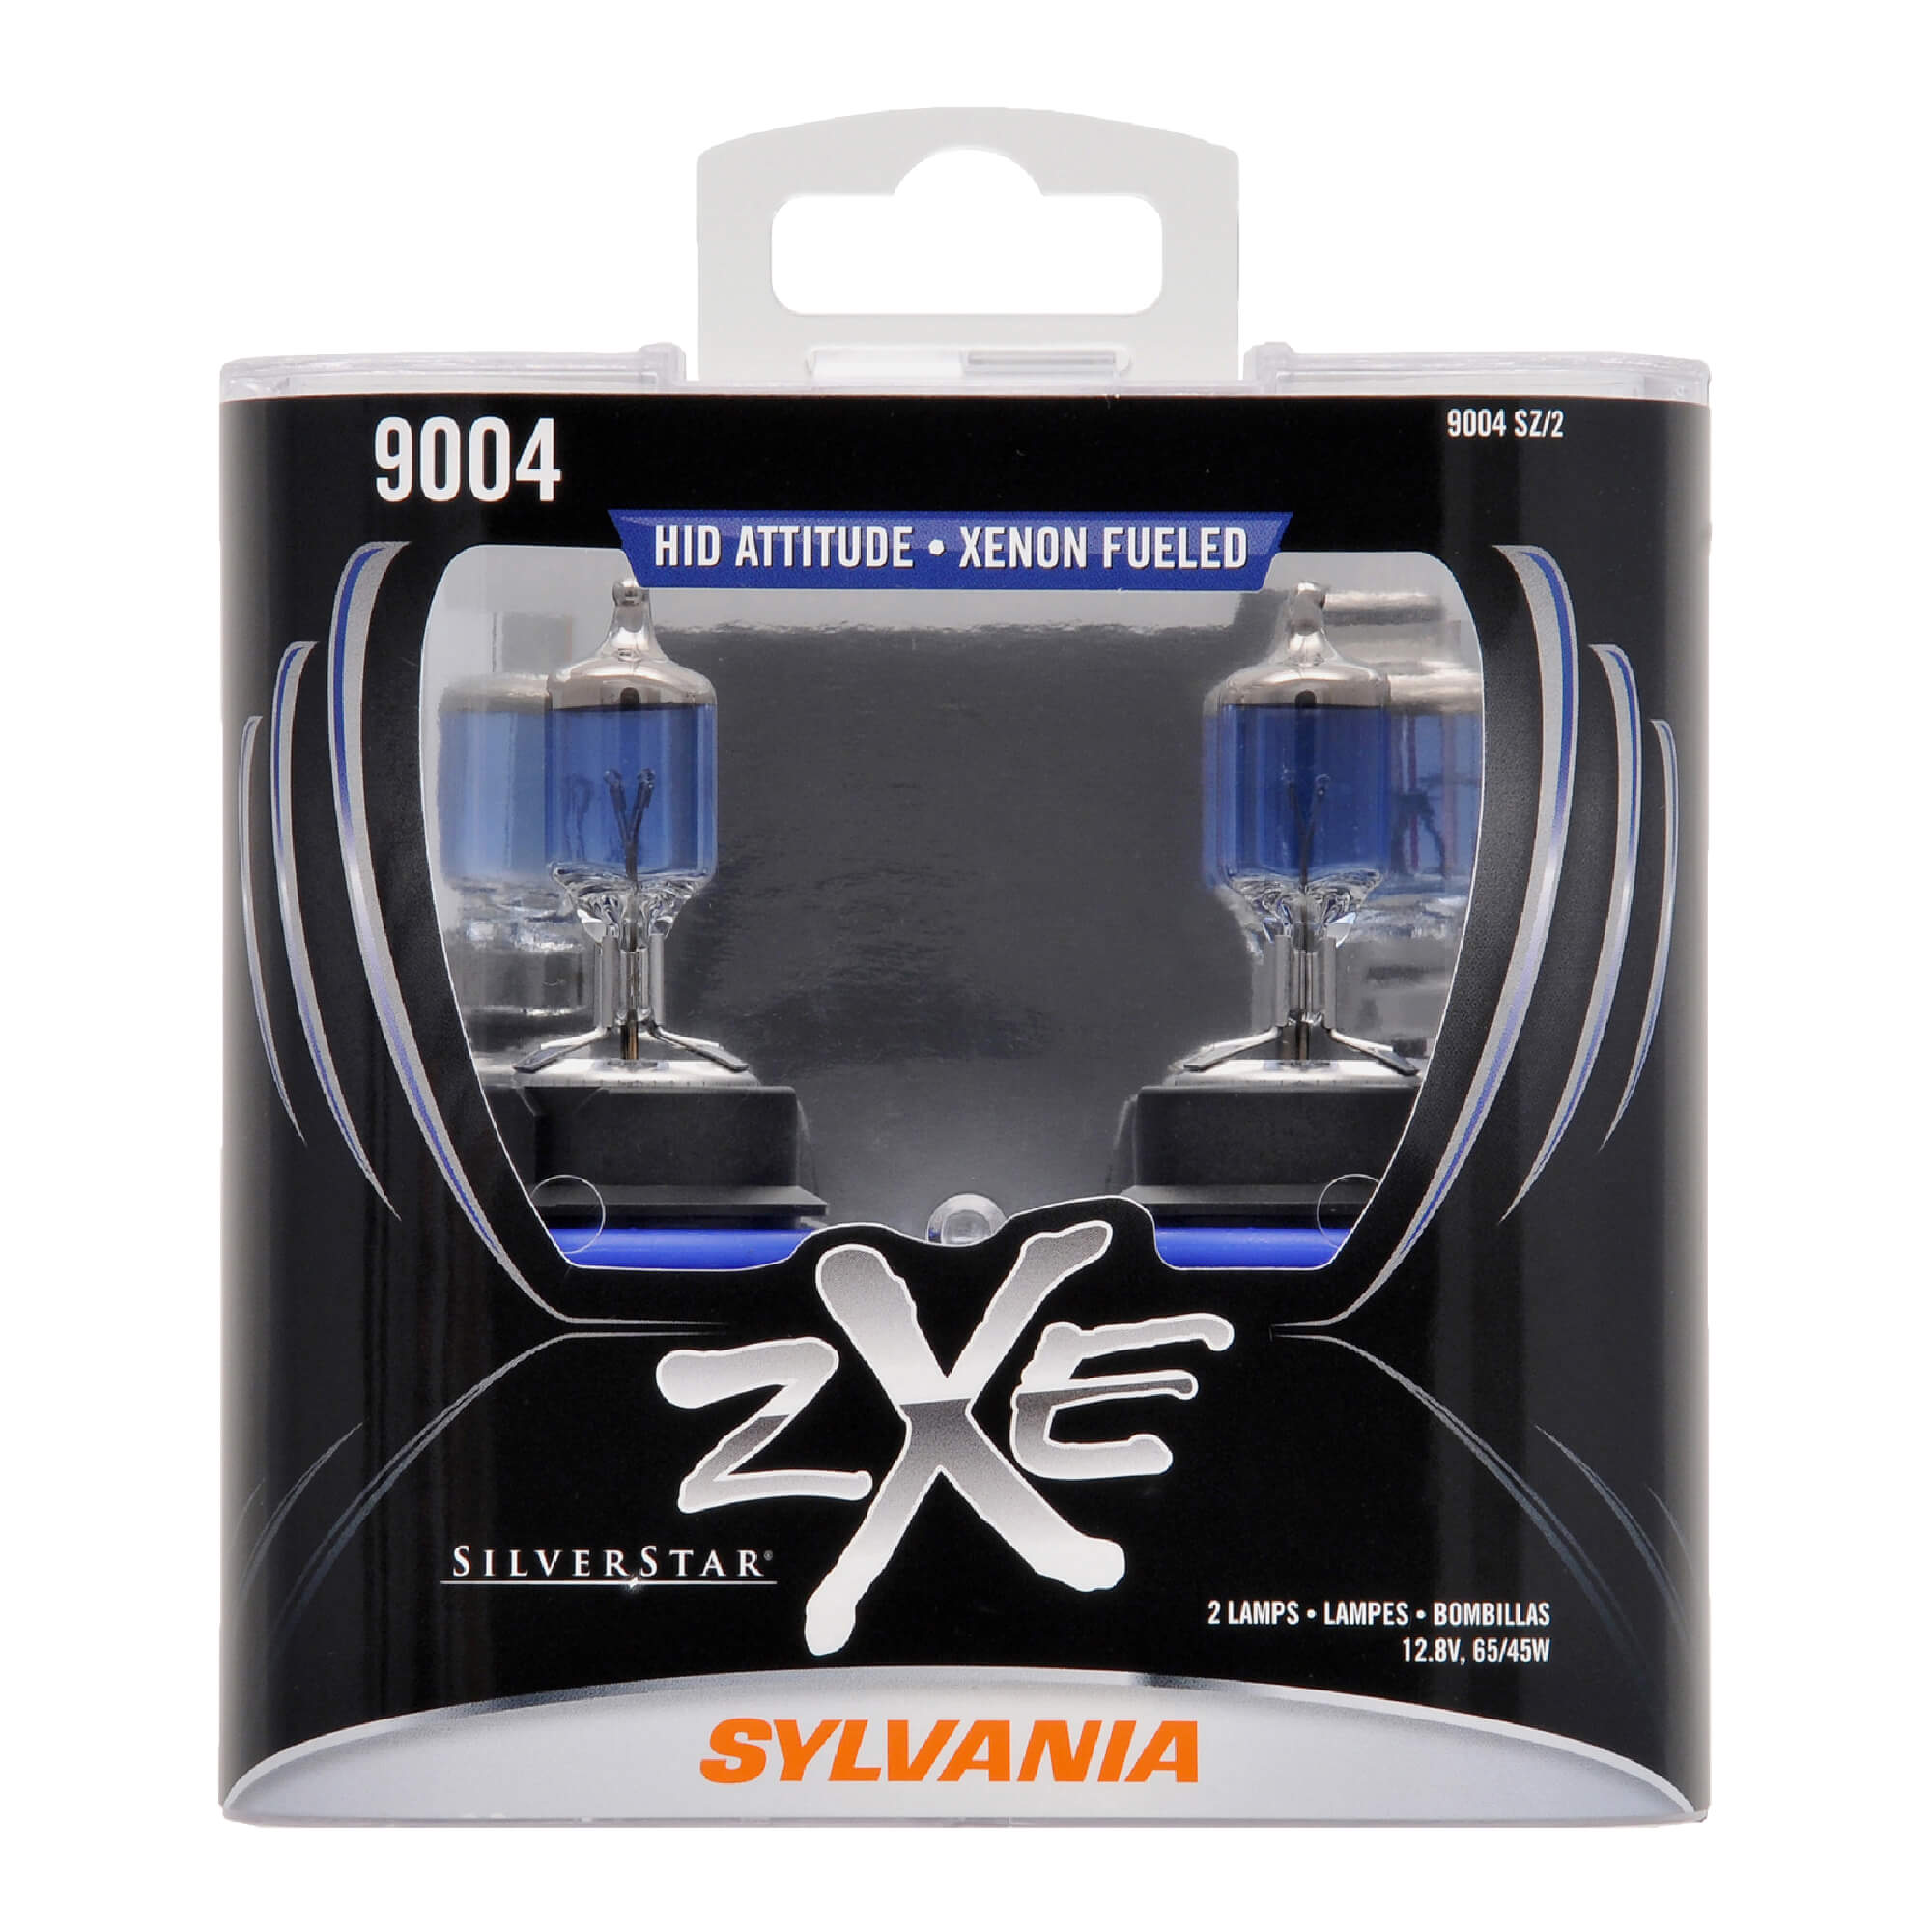 SYLVANIA 9004 SilverStar zXe Halogen Headlight Bulb, 2 Pack